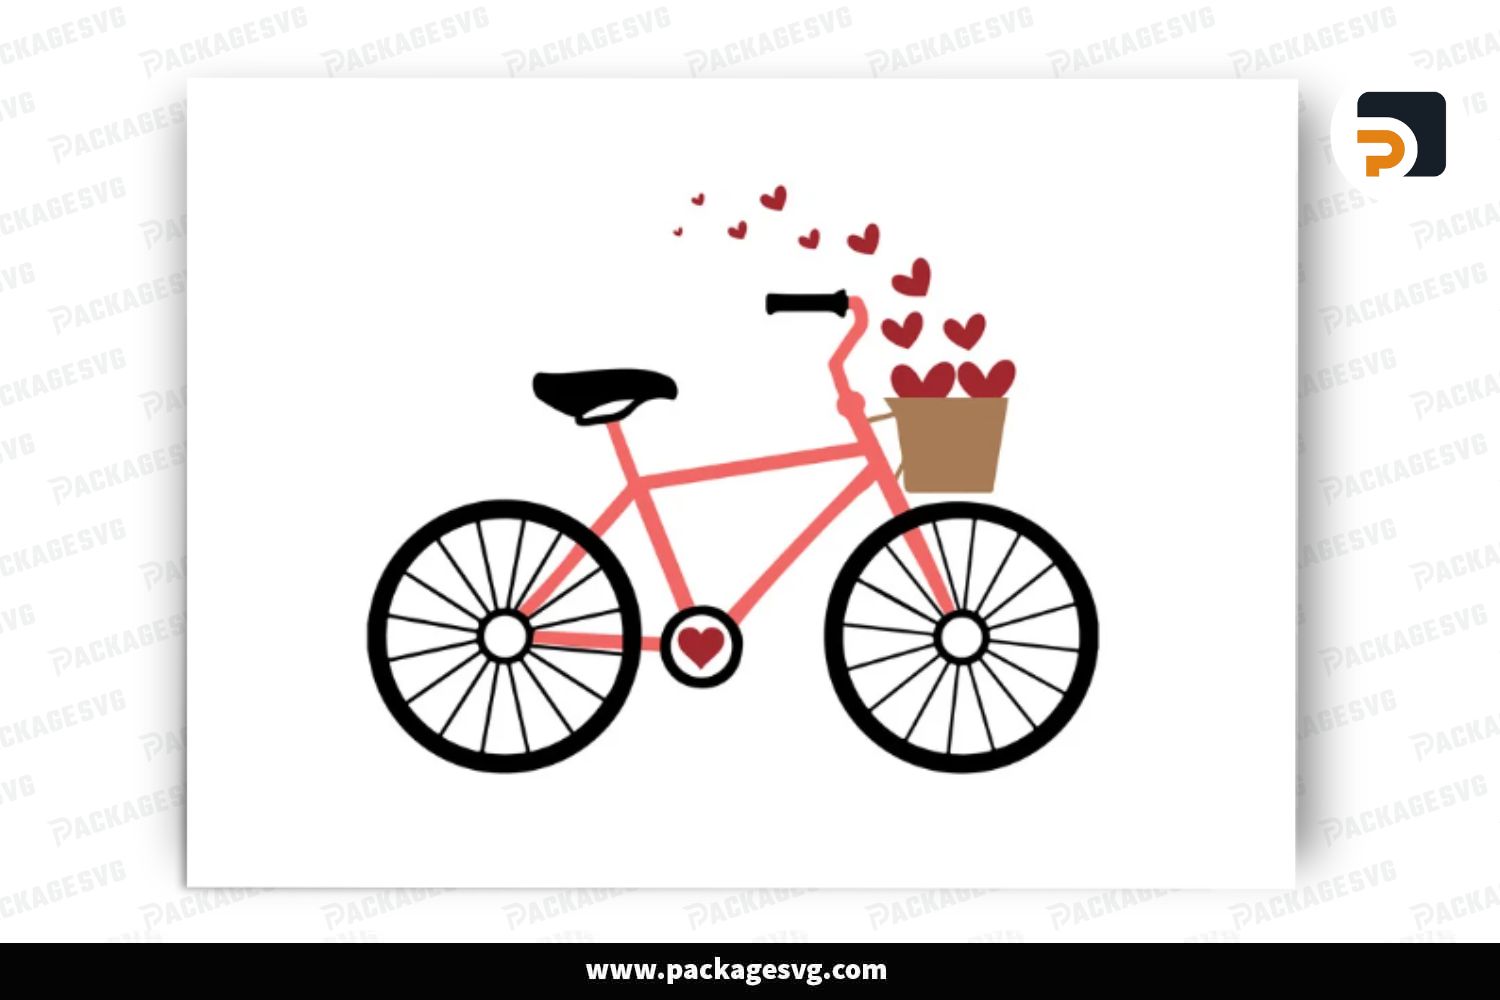 Valentine's Bike SVG Design Free Download